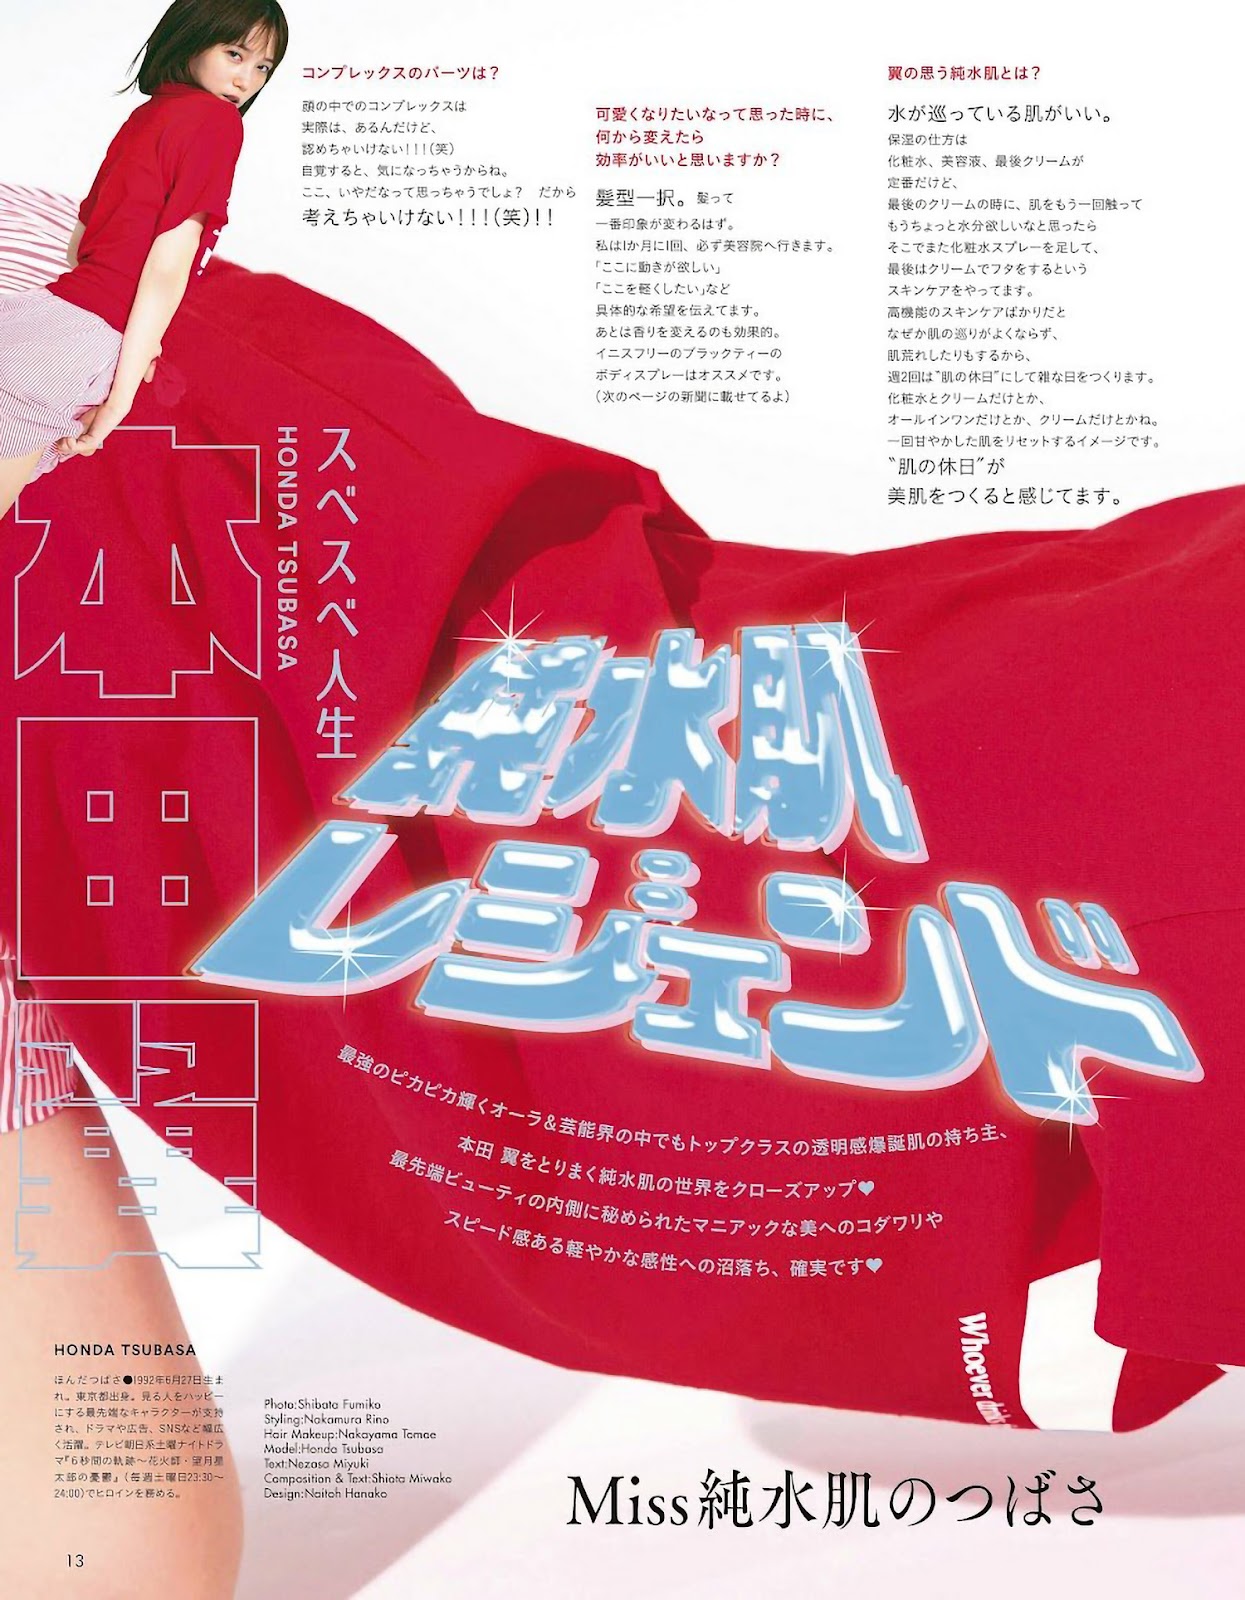 Honda Tsubasa 本田翼, aR (アール) Magazine 2023.02 img 7